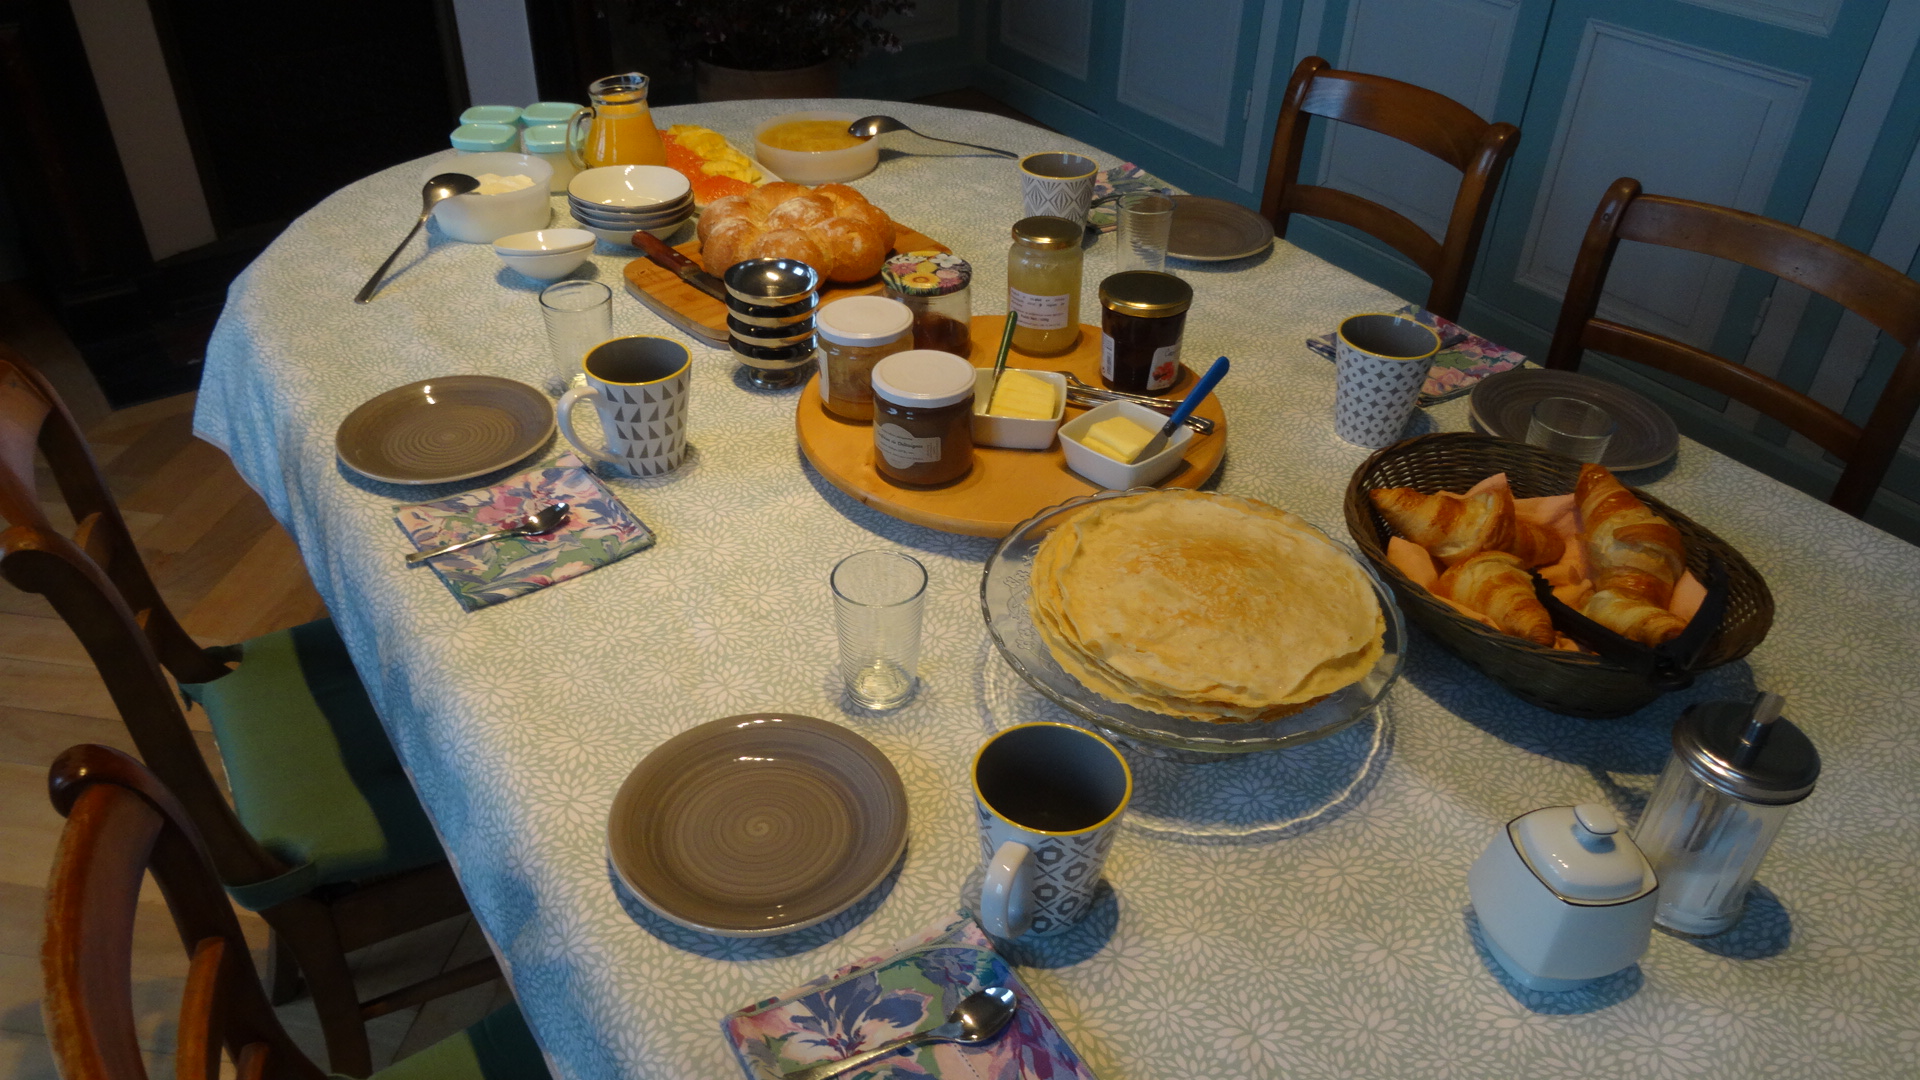 Breakfast table with bread, pastries, yogurts, pancakes, orange juice and fresh fruit